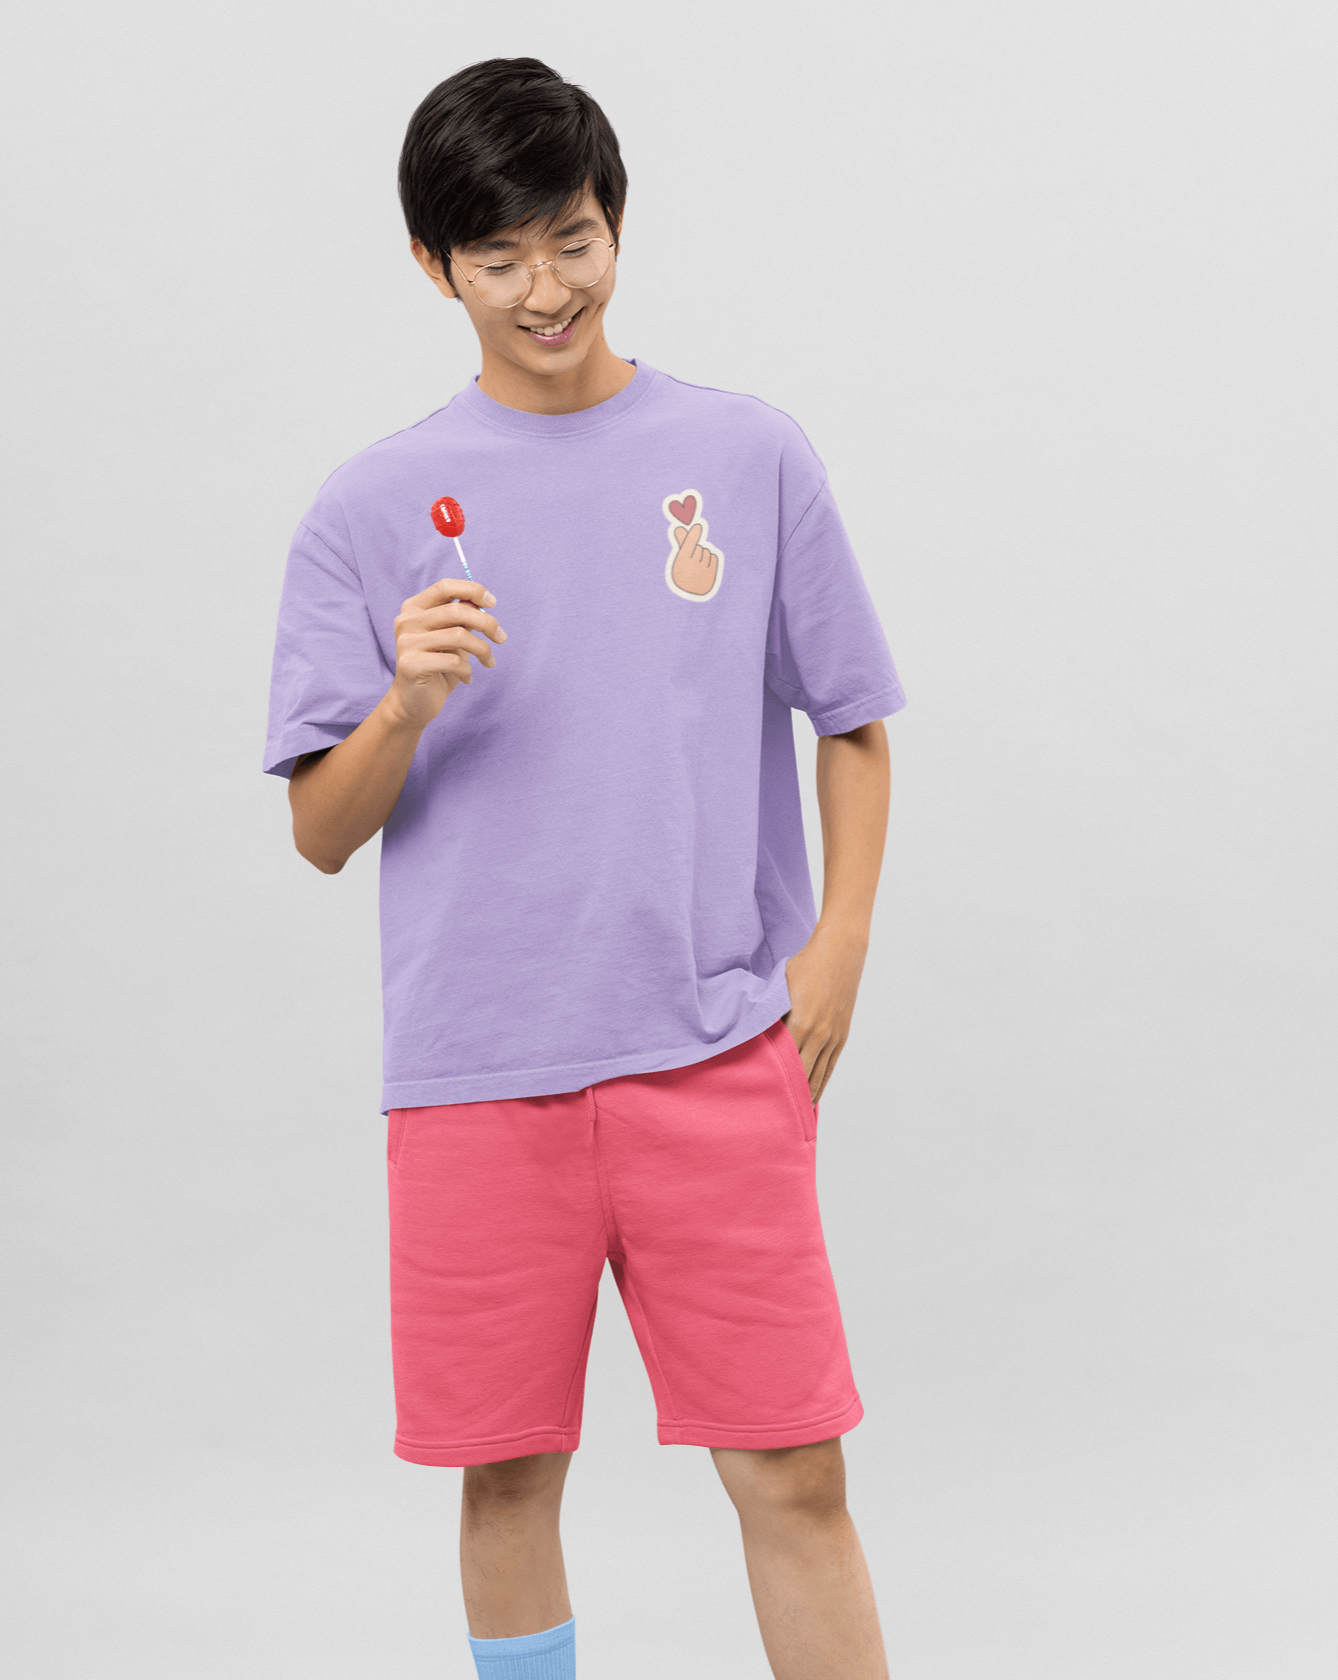 Young Korean Man Wearing Oversized T-shirt Mockup On Street - Mockup Daddy